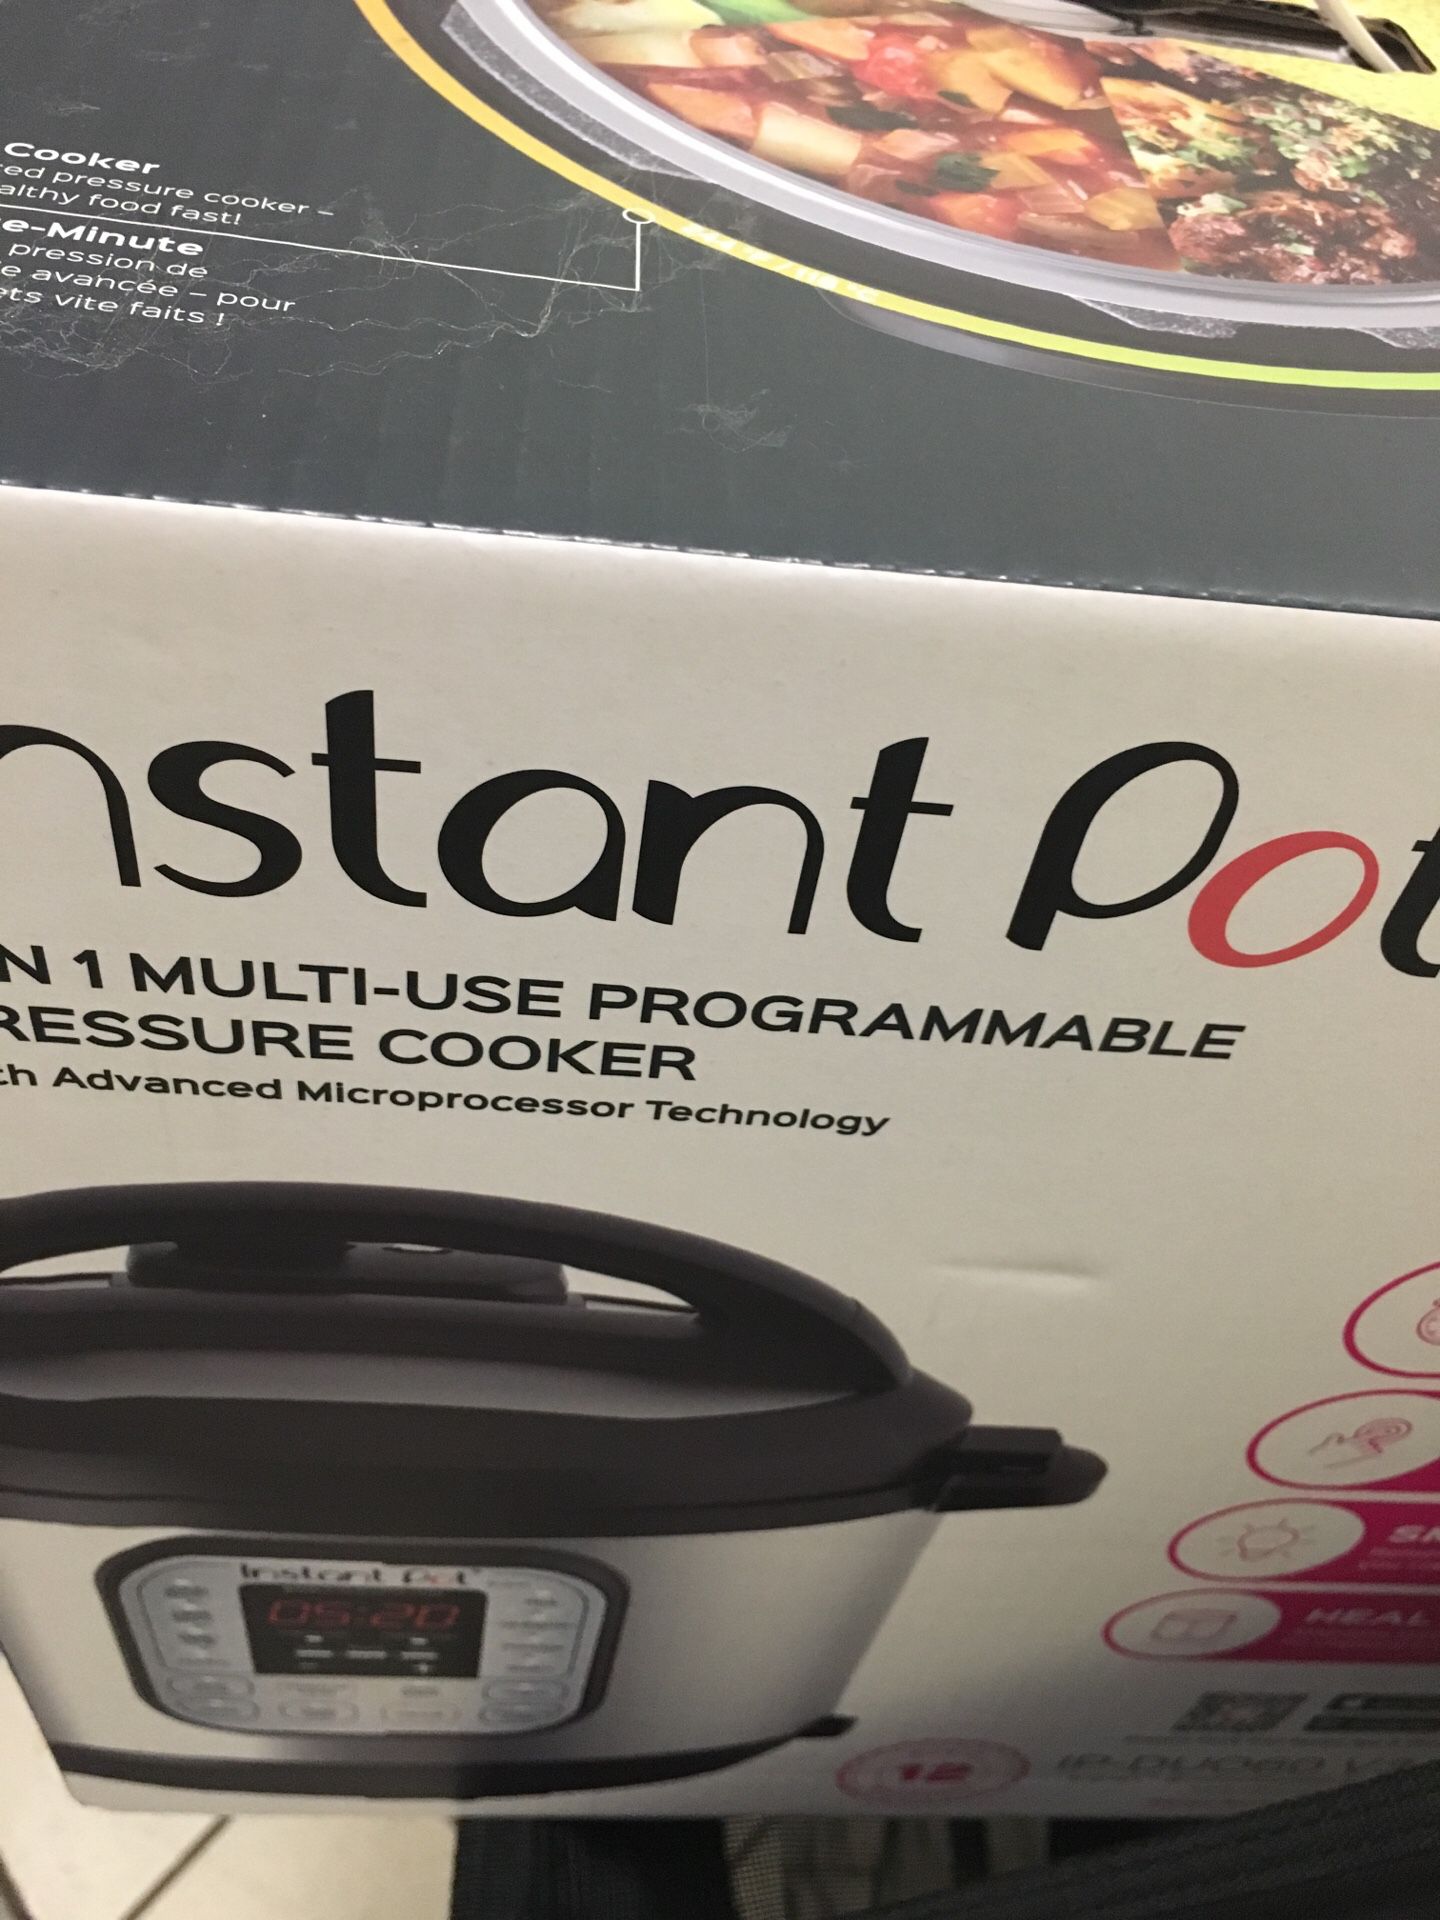 Brand new instant pot 6 qts